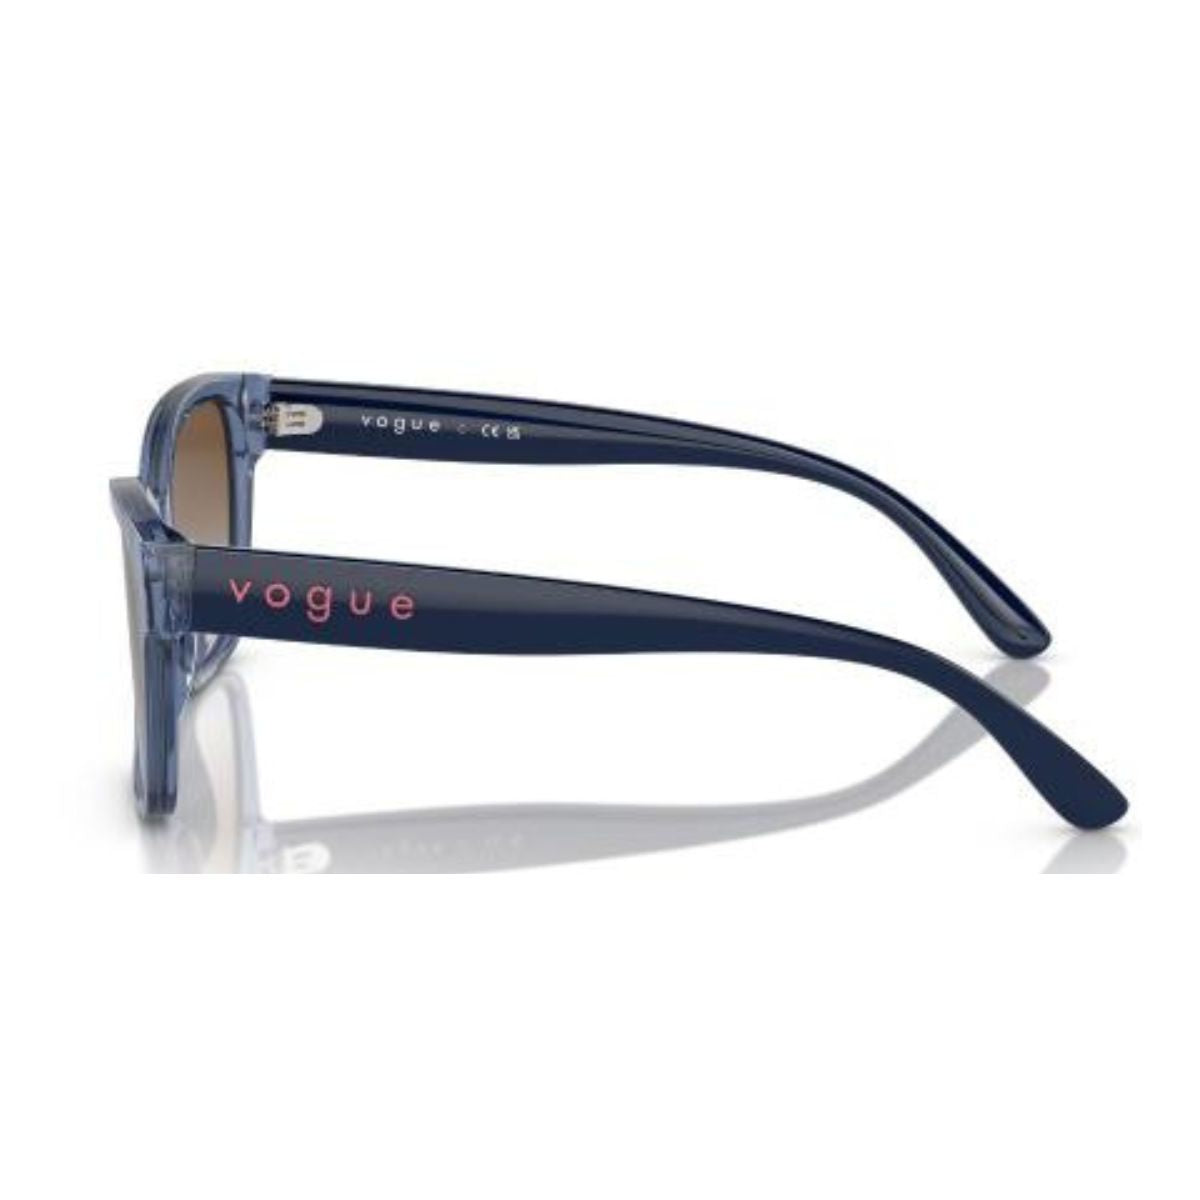 "Buy Vogue Blue Cat Eye Sunglasses For Womens At Optorium"